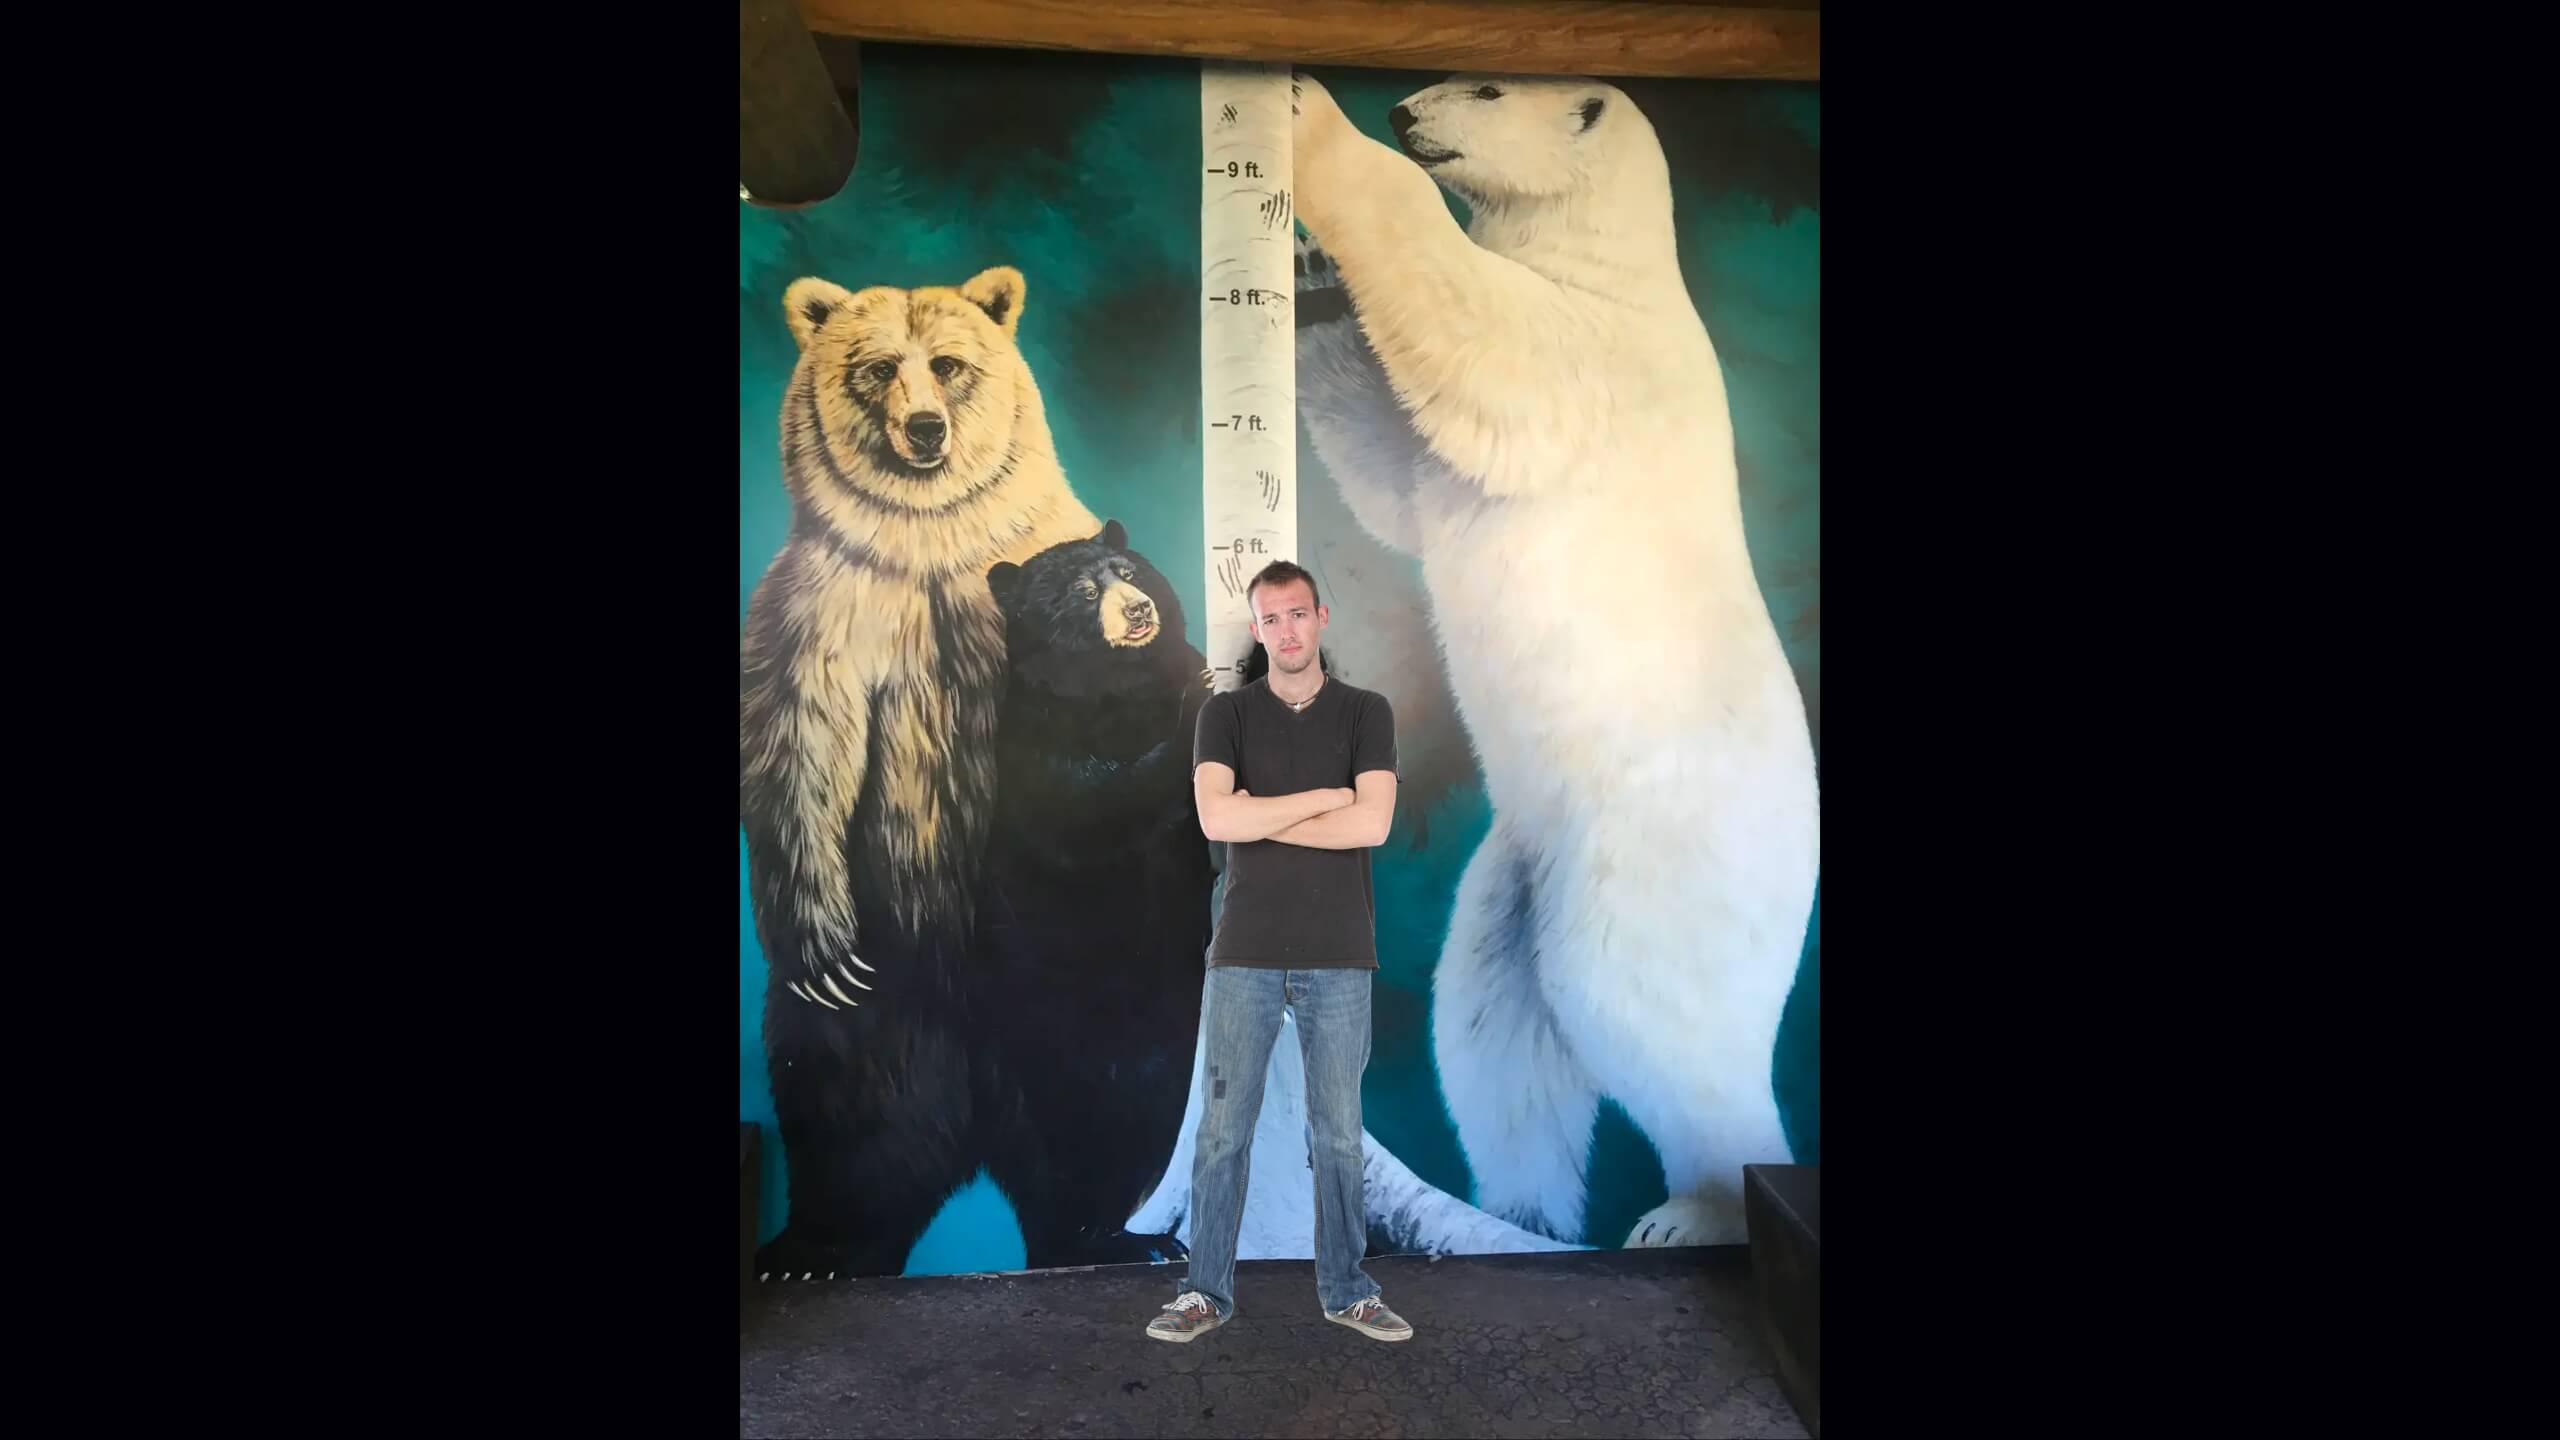 Polar Bear, Grizzly Bear and human height comparison